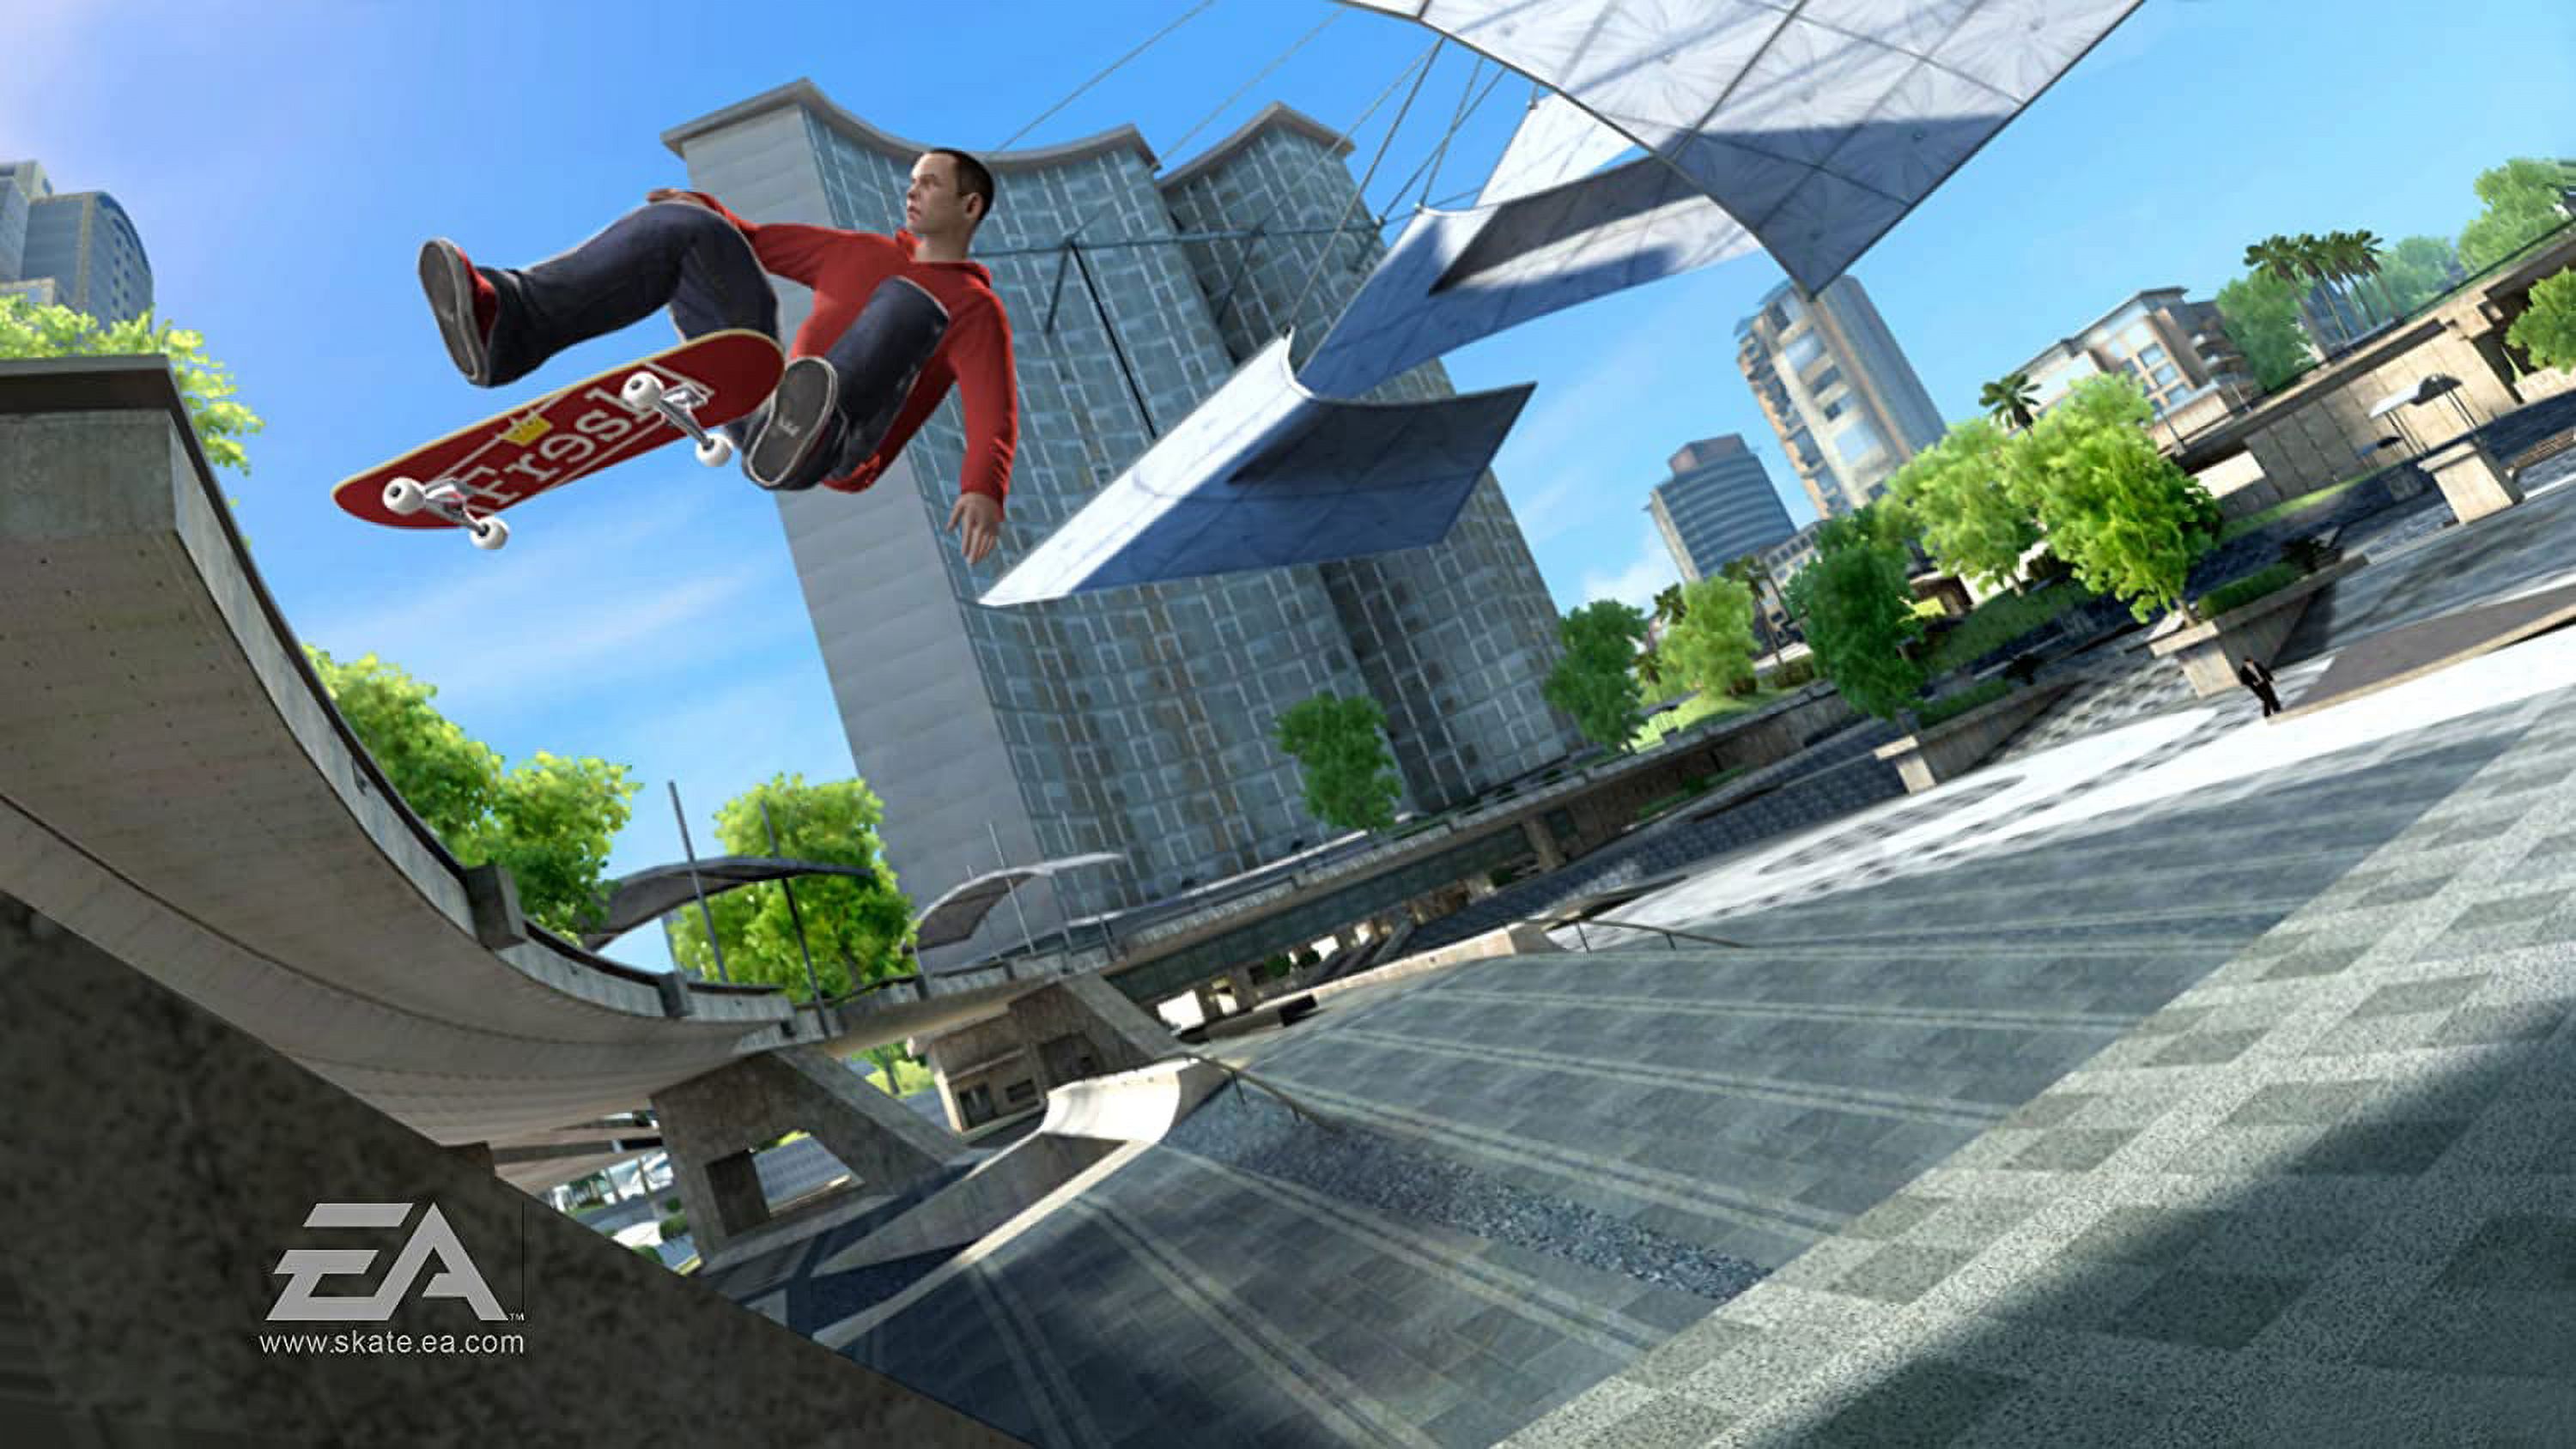 Skate 3, Xbox 360 - Electronic Arts